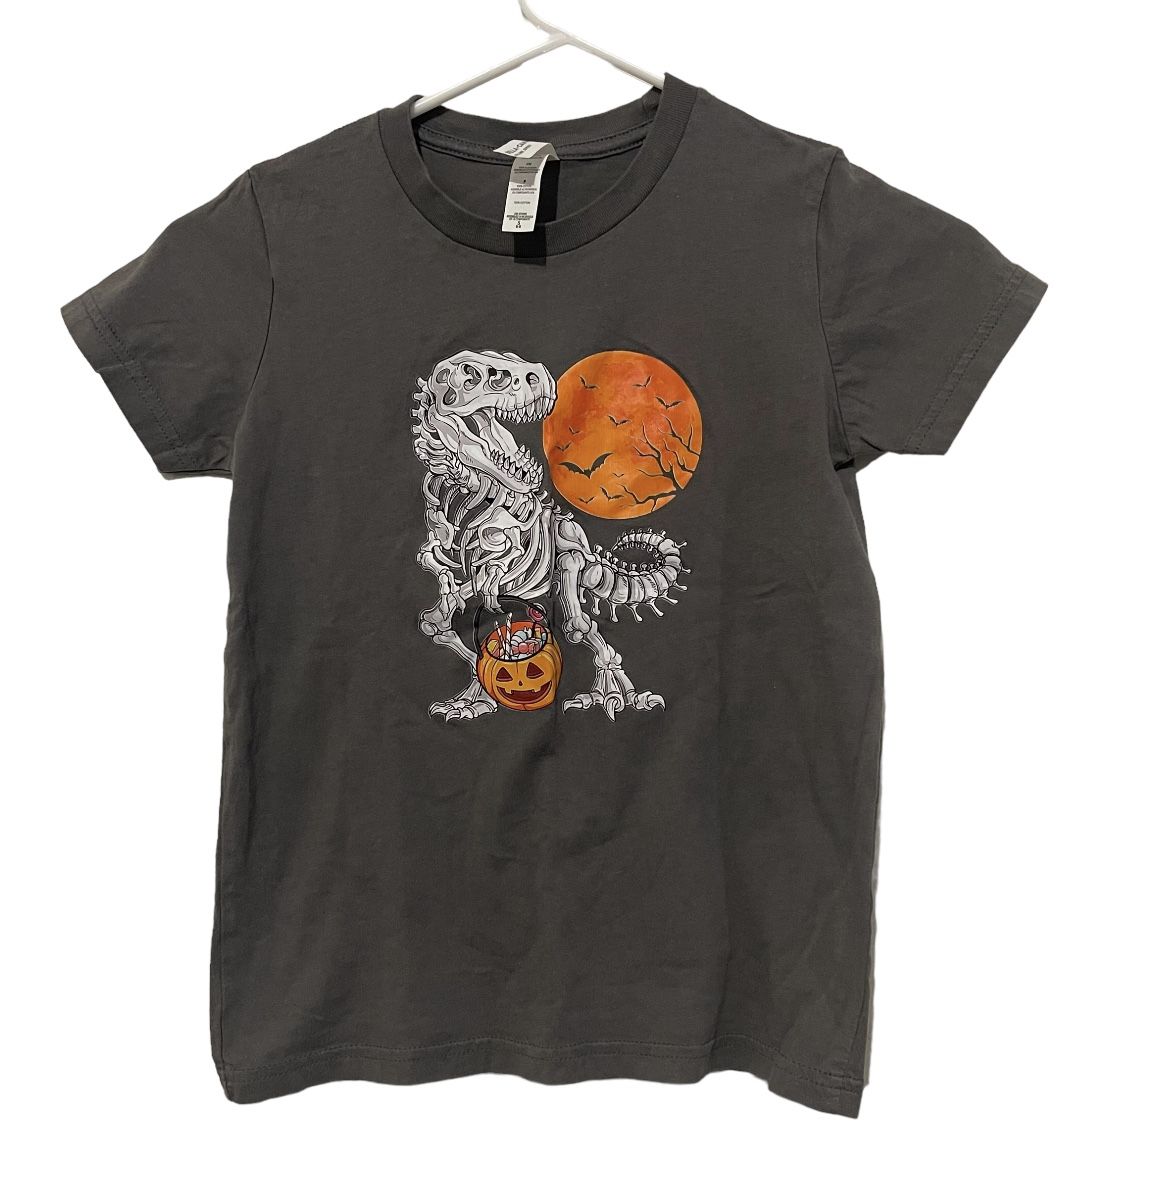 Bella + Canvas Shirt Youth Boys Size Small 6-8 Dinosaur Short Sleeve Gray